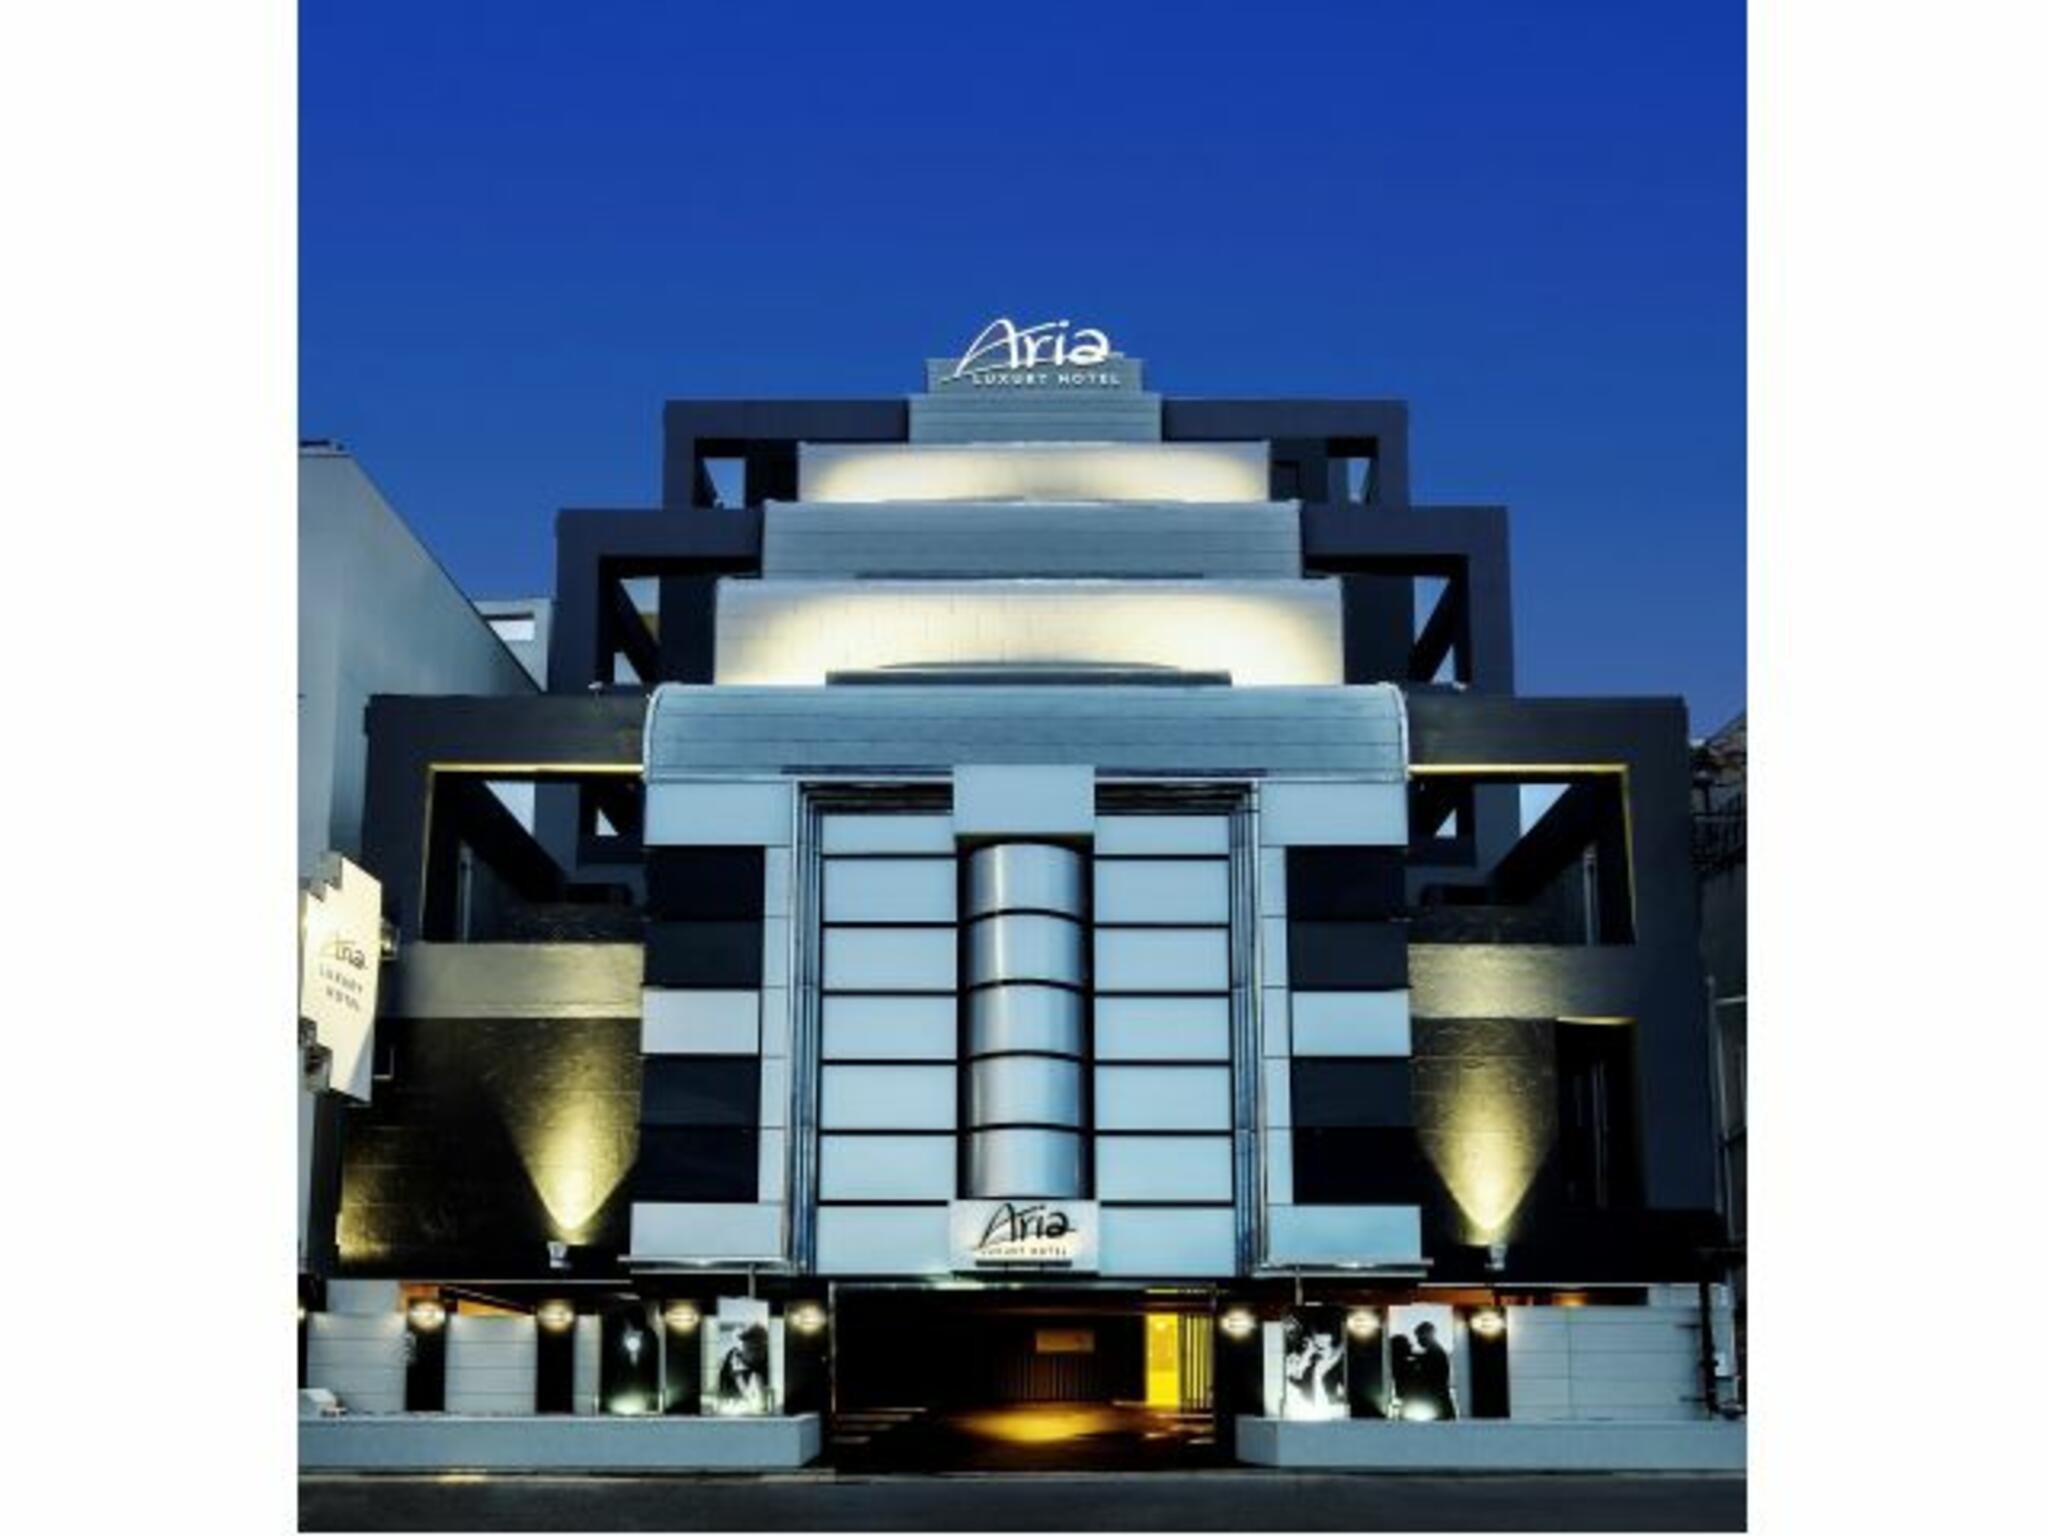 HOTEL Aria (ホテル アリア)の代表写真1